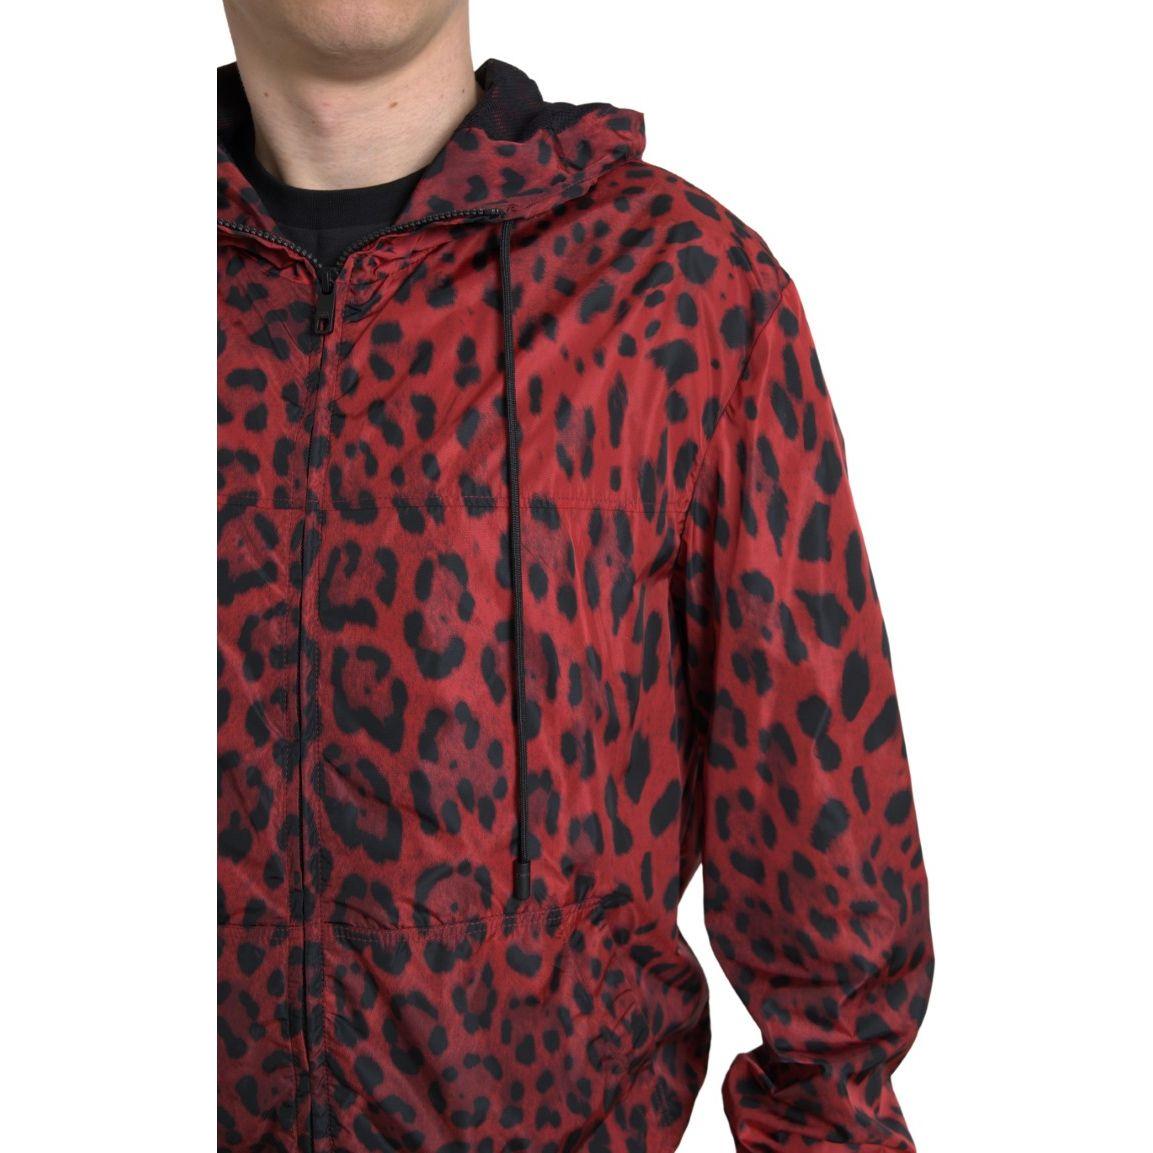 Dolce & Gabbana Red Leopard Hooded Bomber Jacket red-leopard-hooded-bomber-full-zip-jacket 465A7714-Medium-95f7c5d8-189.jpg